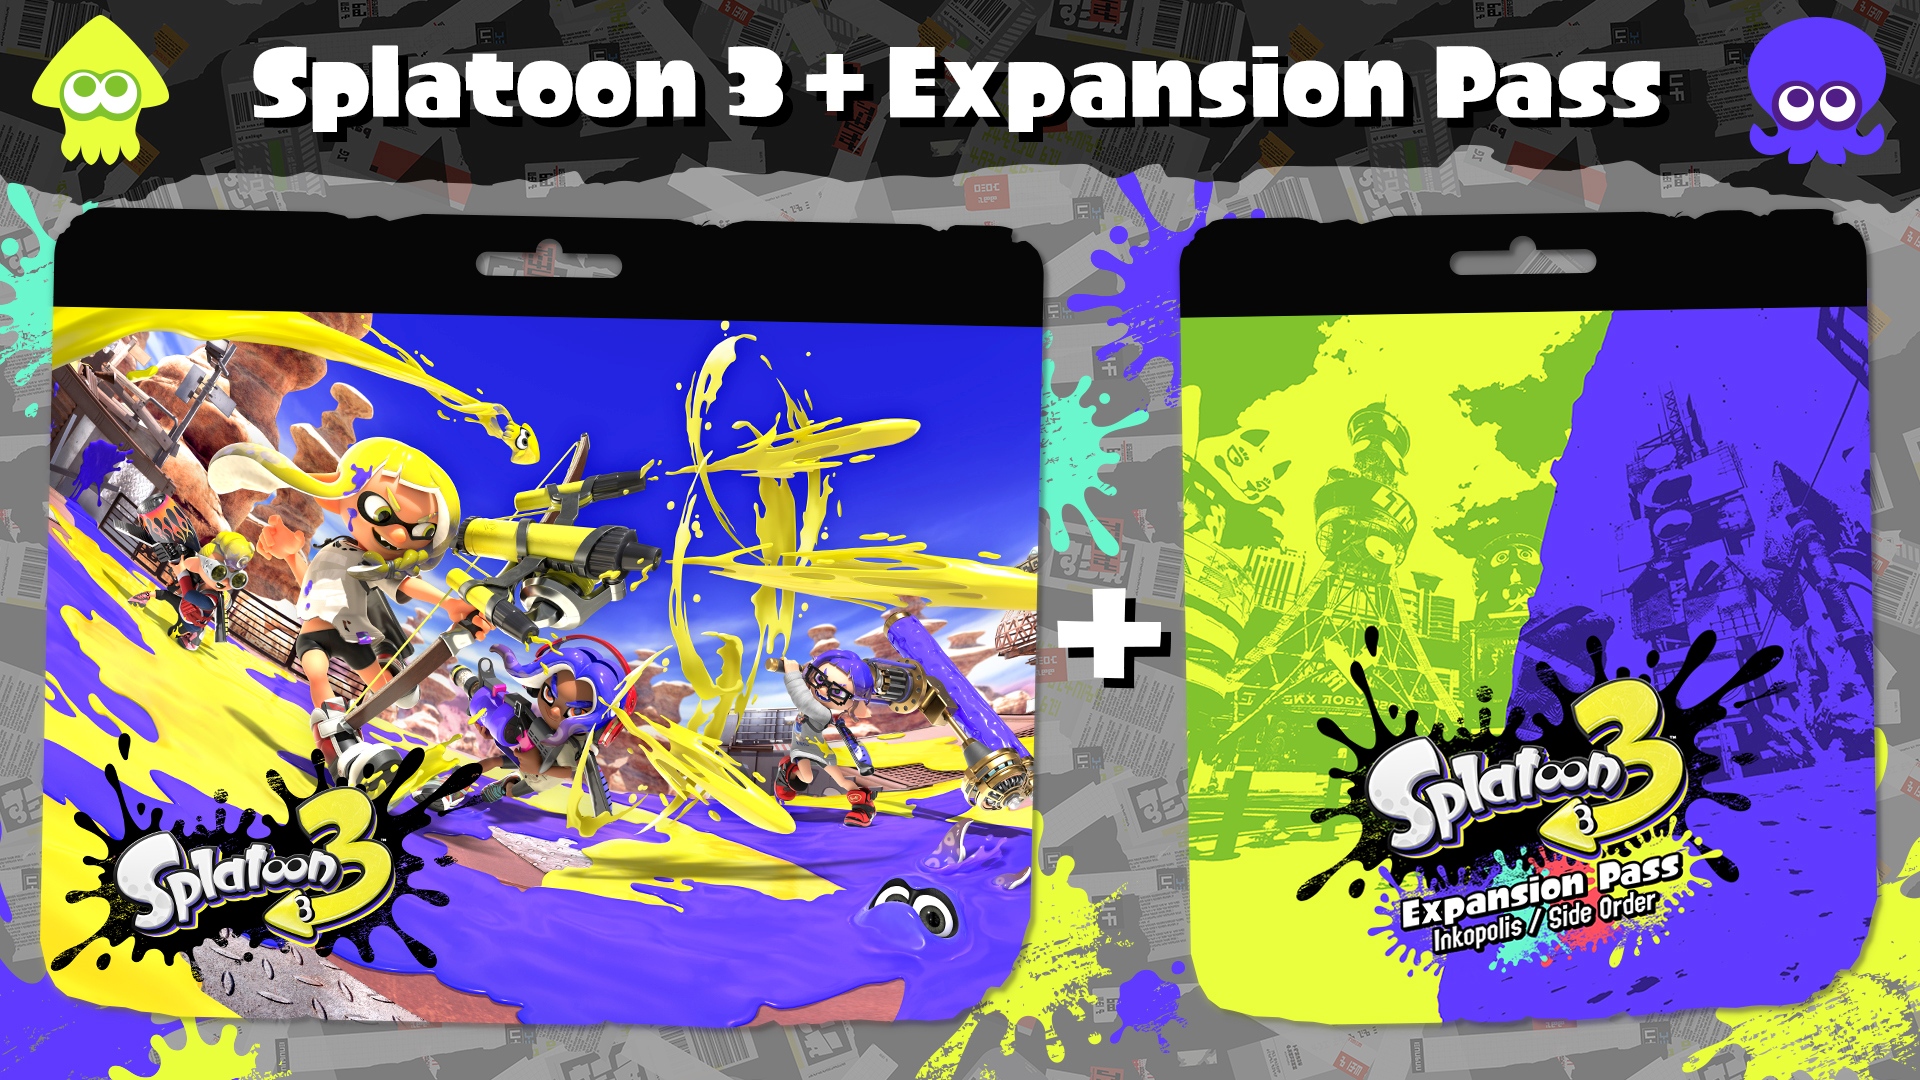 Splatoon 3 + Expansion Pass